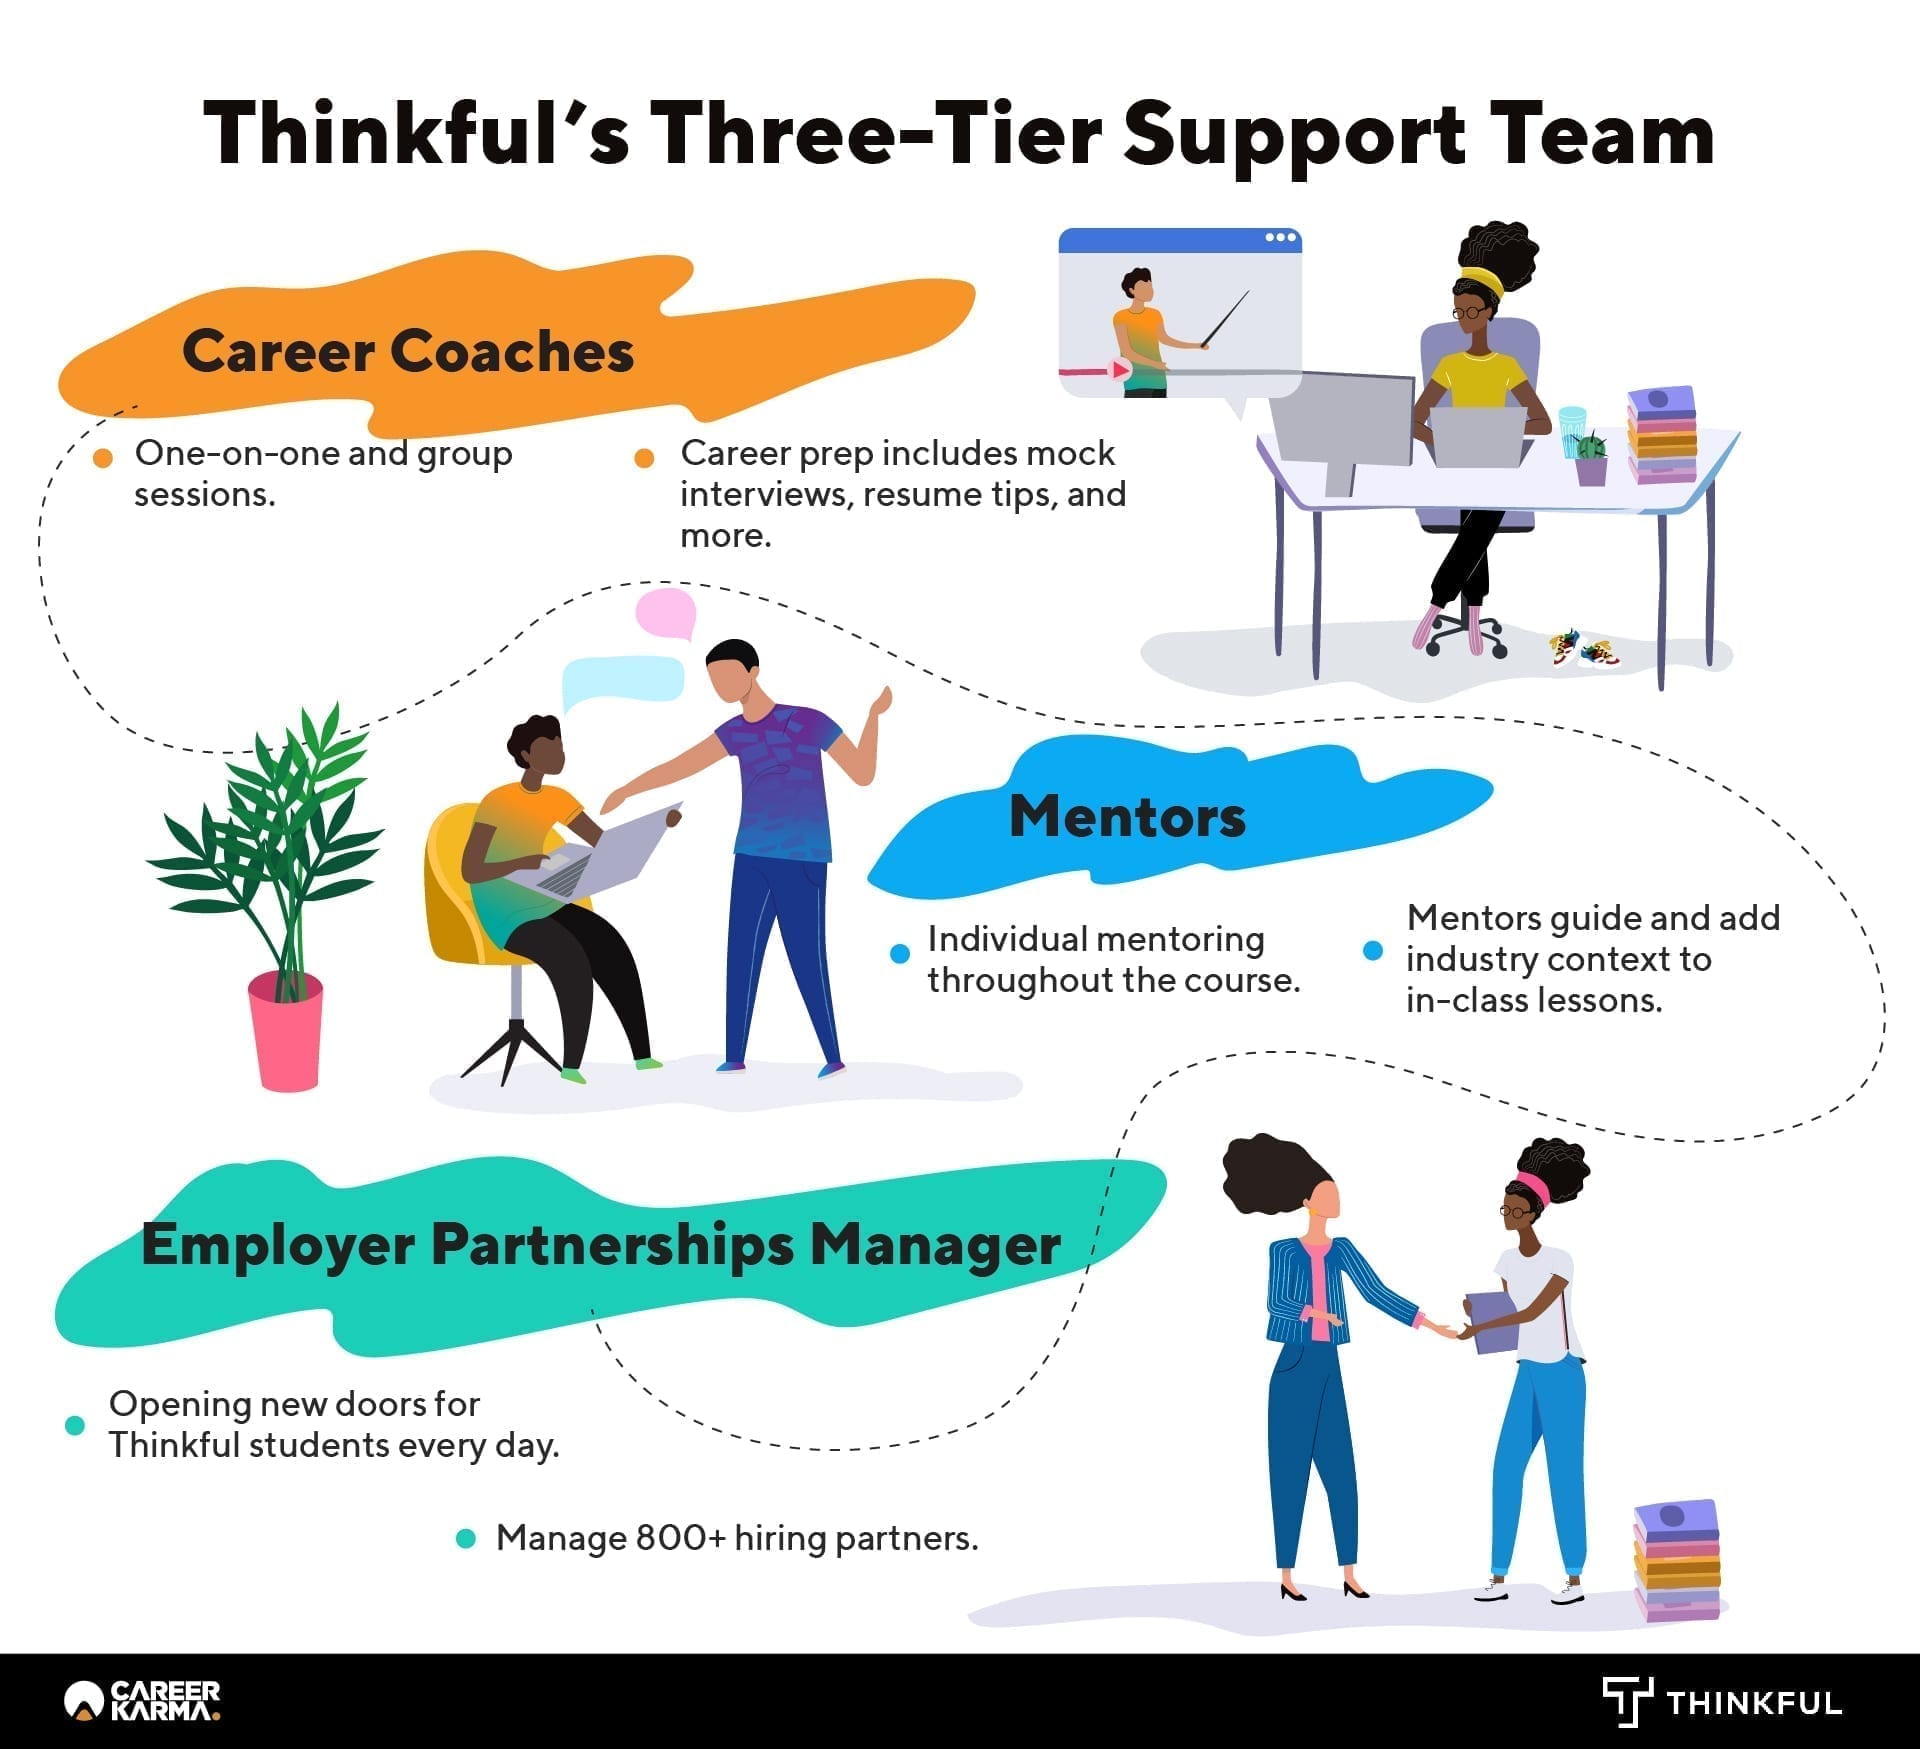 Thinkful's Three-Tier Support Team